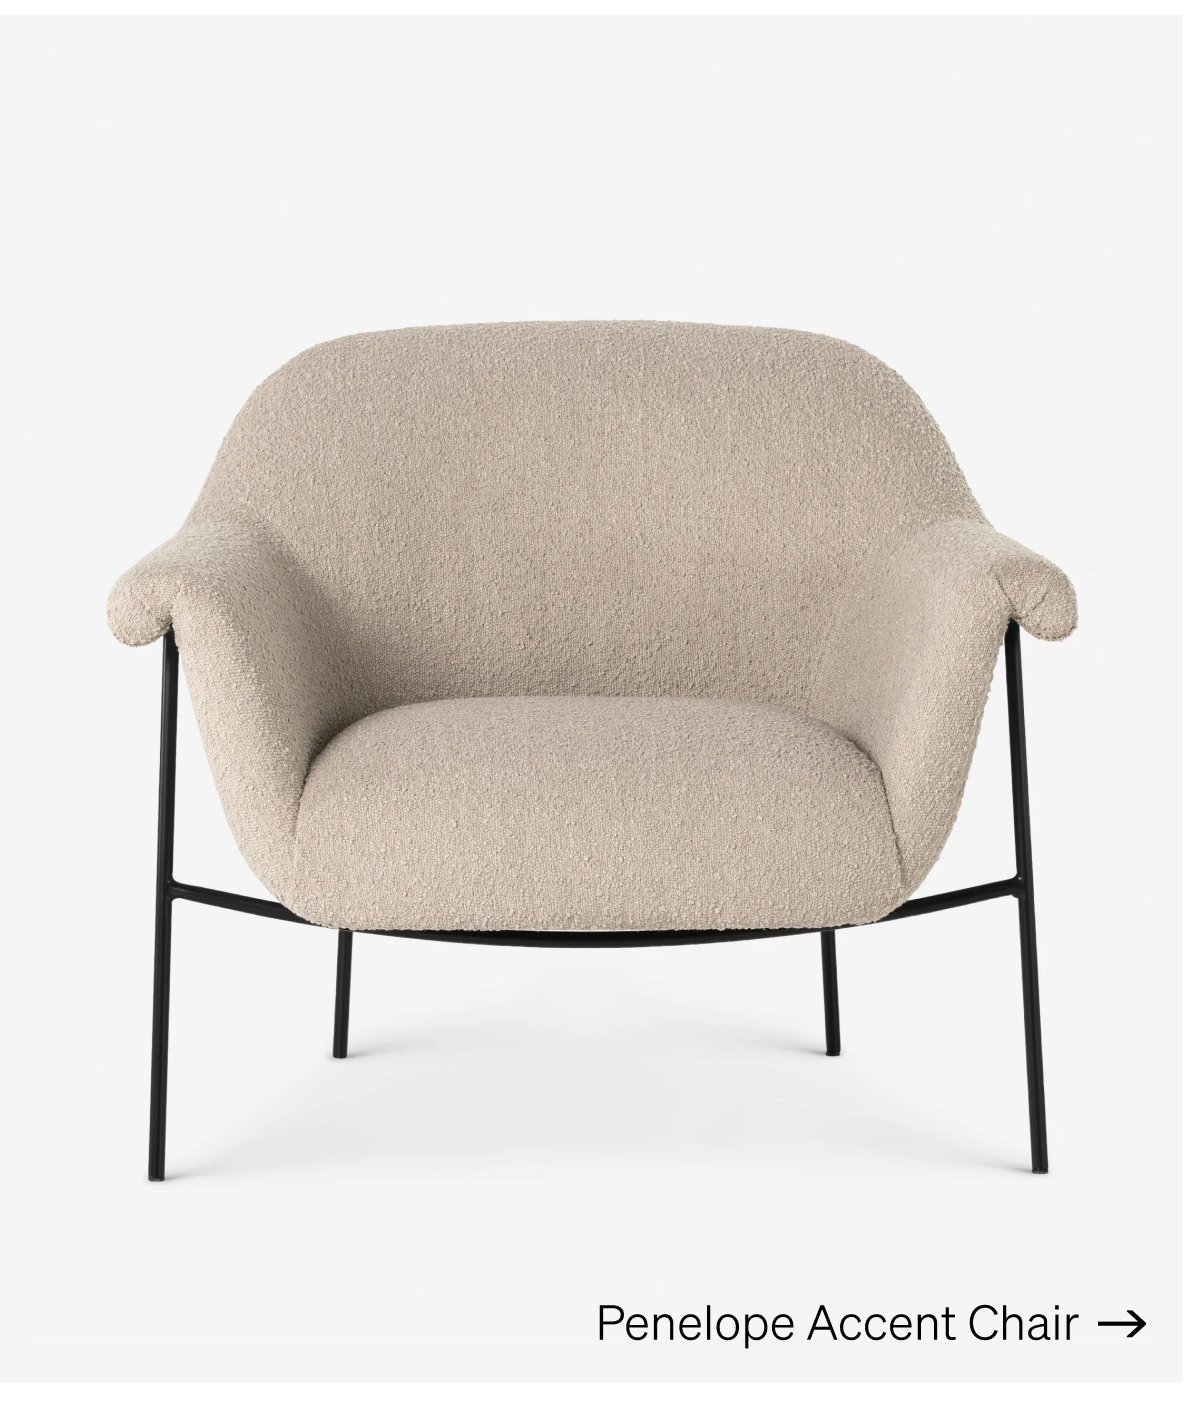 Shop Penelope Accent Chair